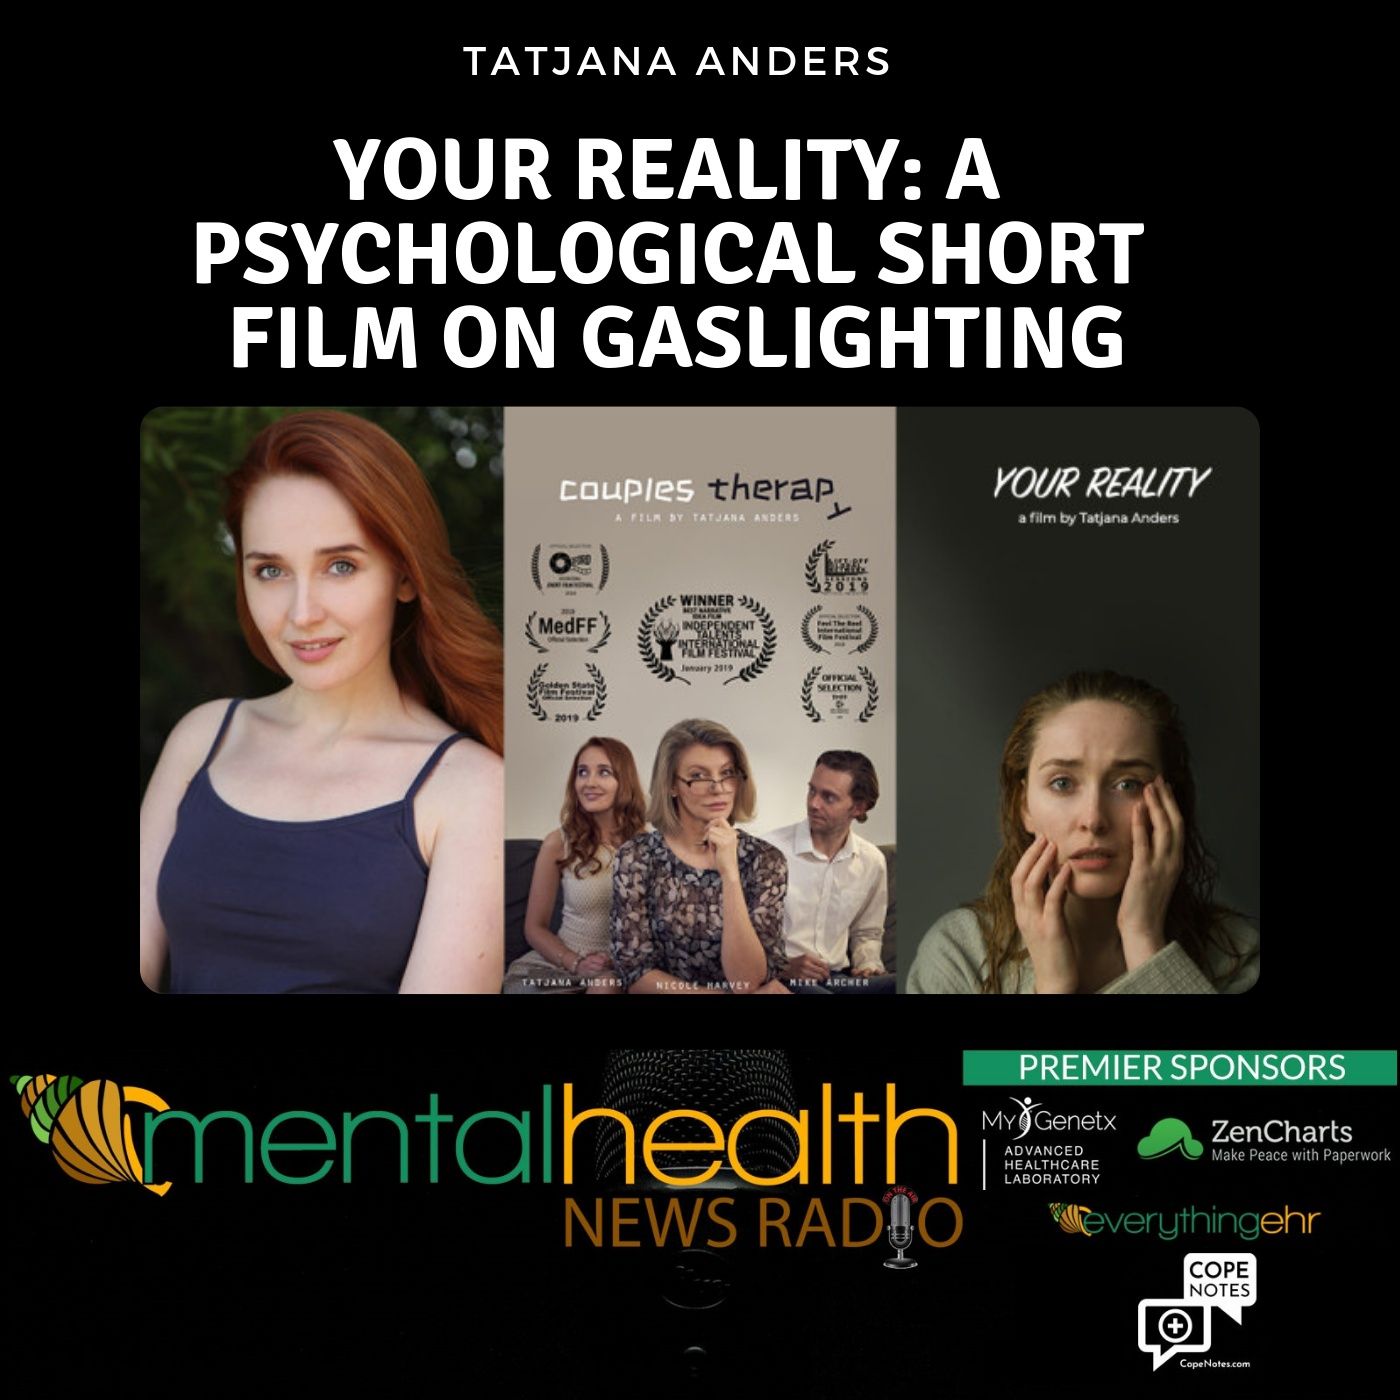 Mental Health News Radio - Your Reality: A Psychological Short Film on Gaslighting